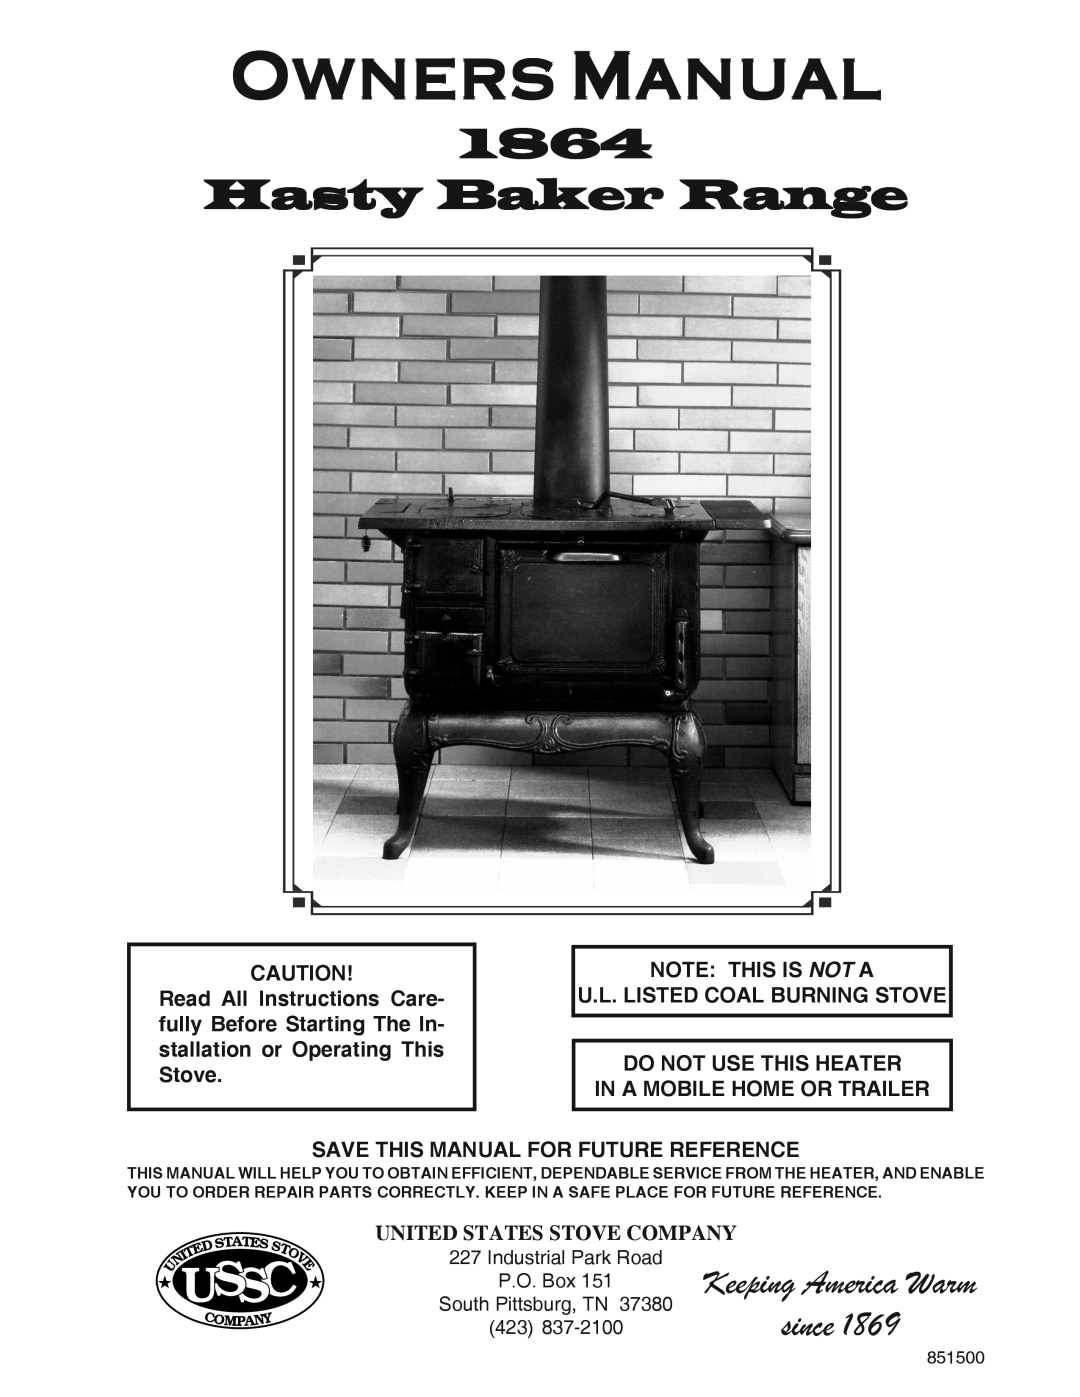 United States Stove 1864 owner manual Ussc, Hasty Baker Range, Keeping America Warm, since, United States Stove Company 